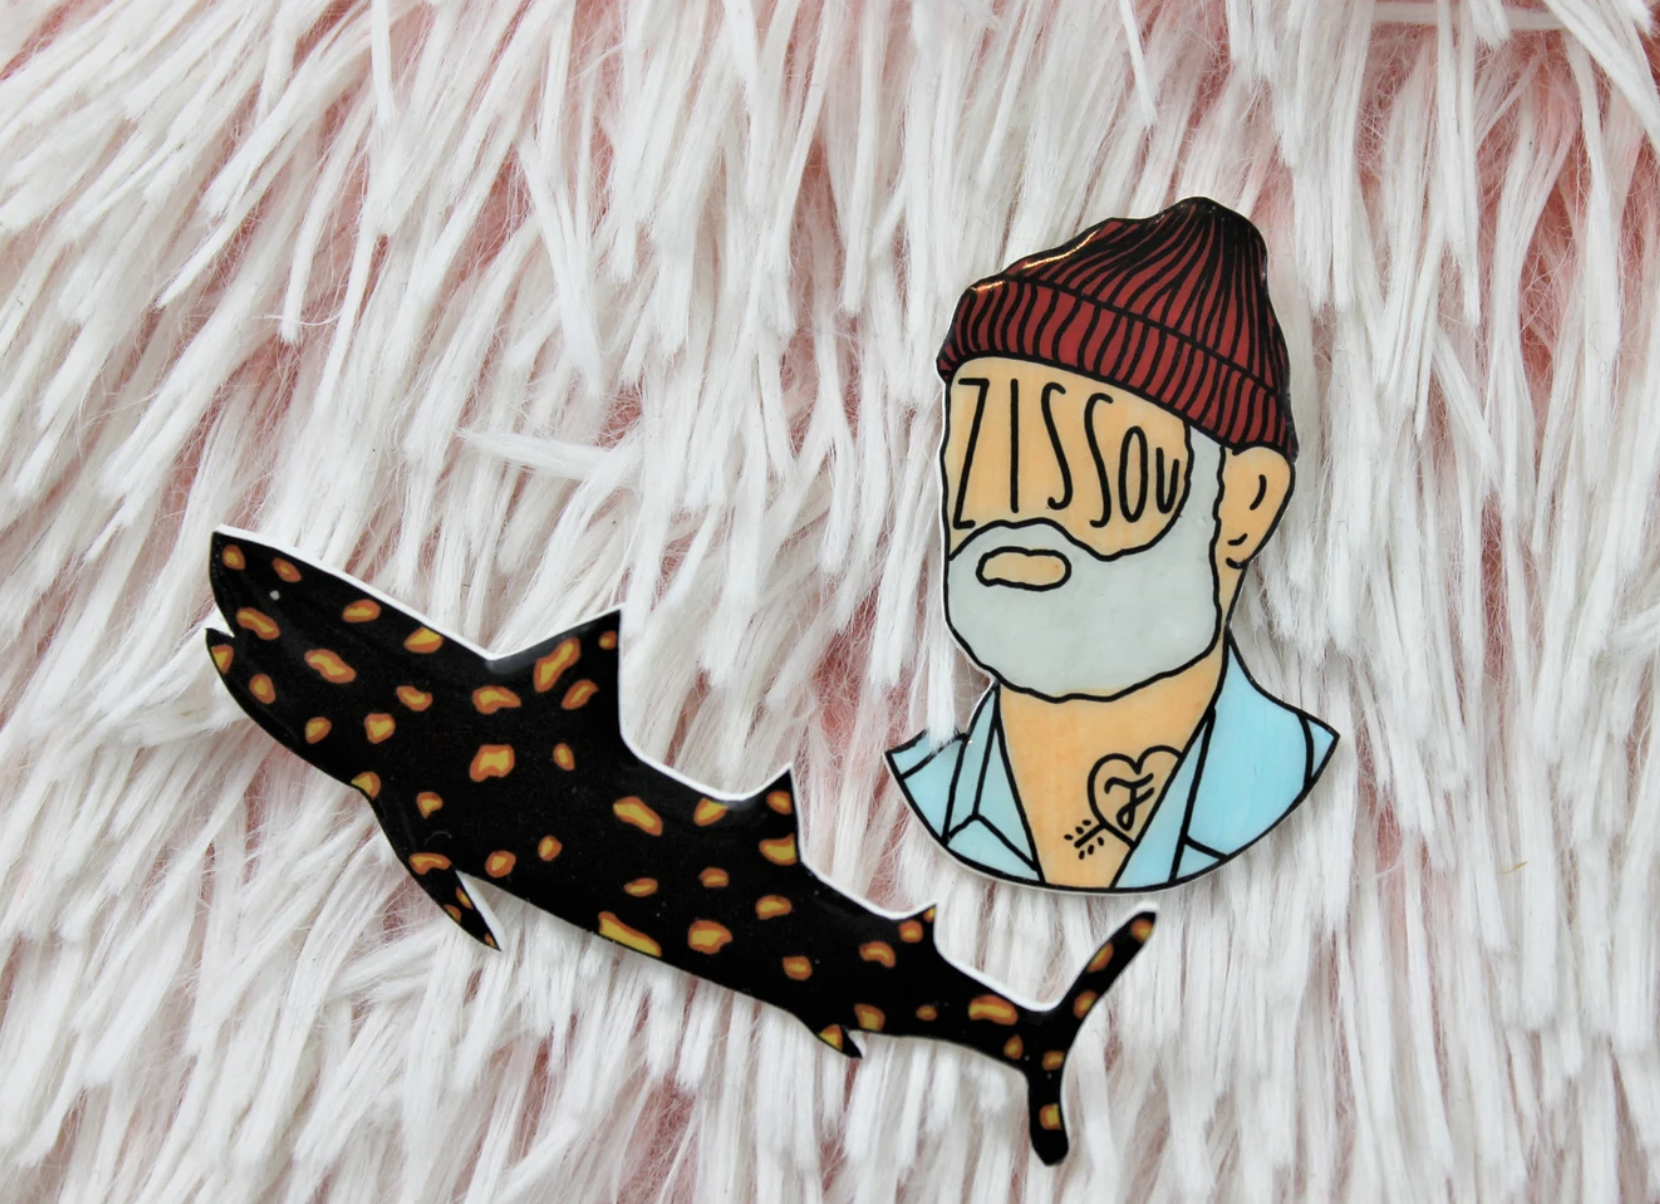 a jaguar shark pin and a steve zissou pin